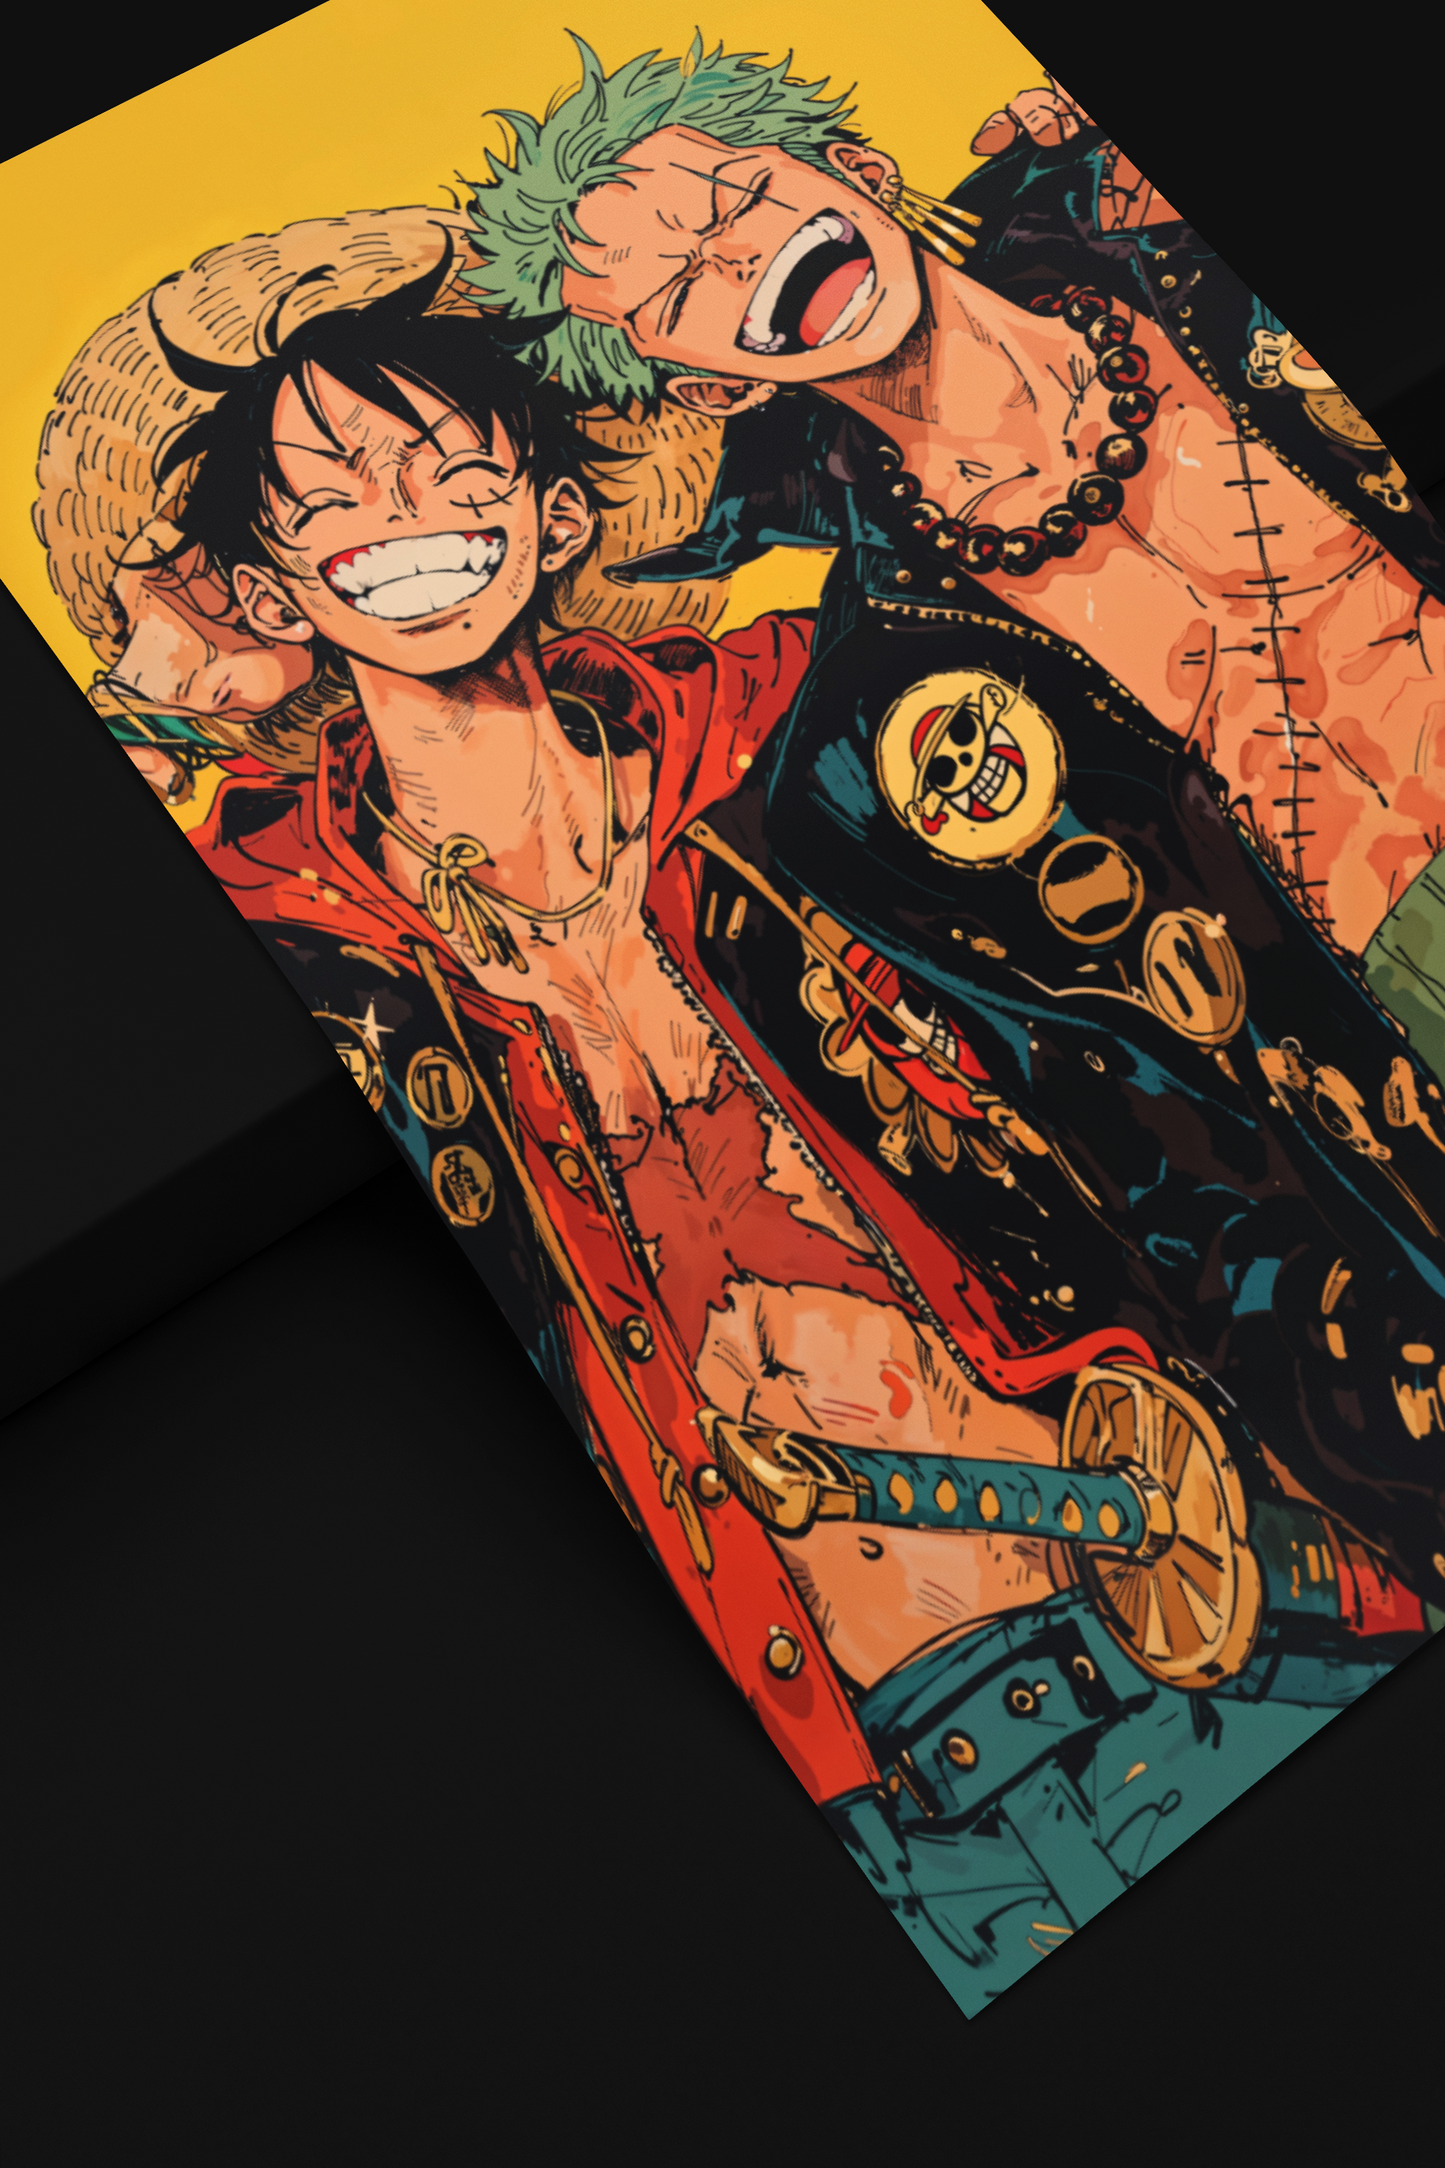 One Piece | Luffy x Zoro Wall Art